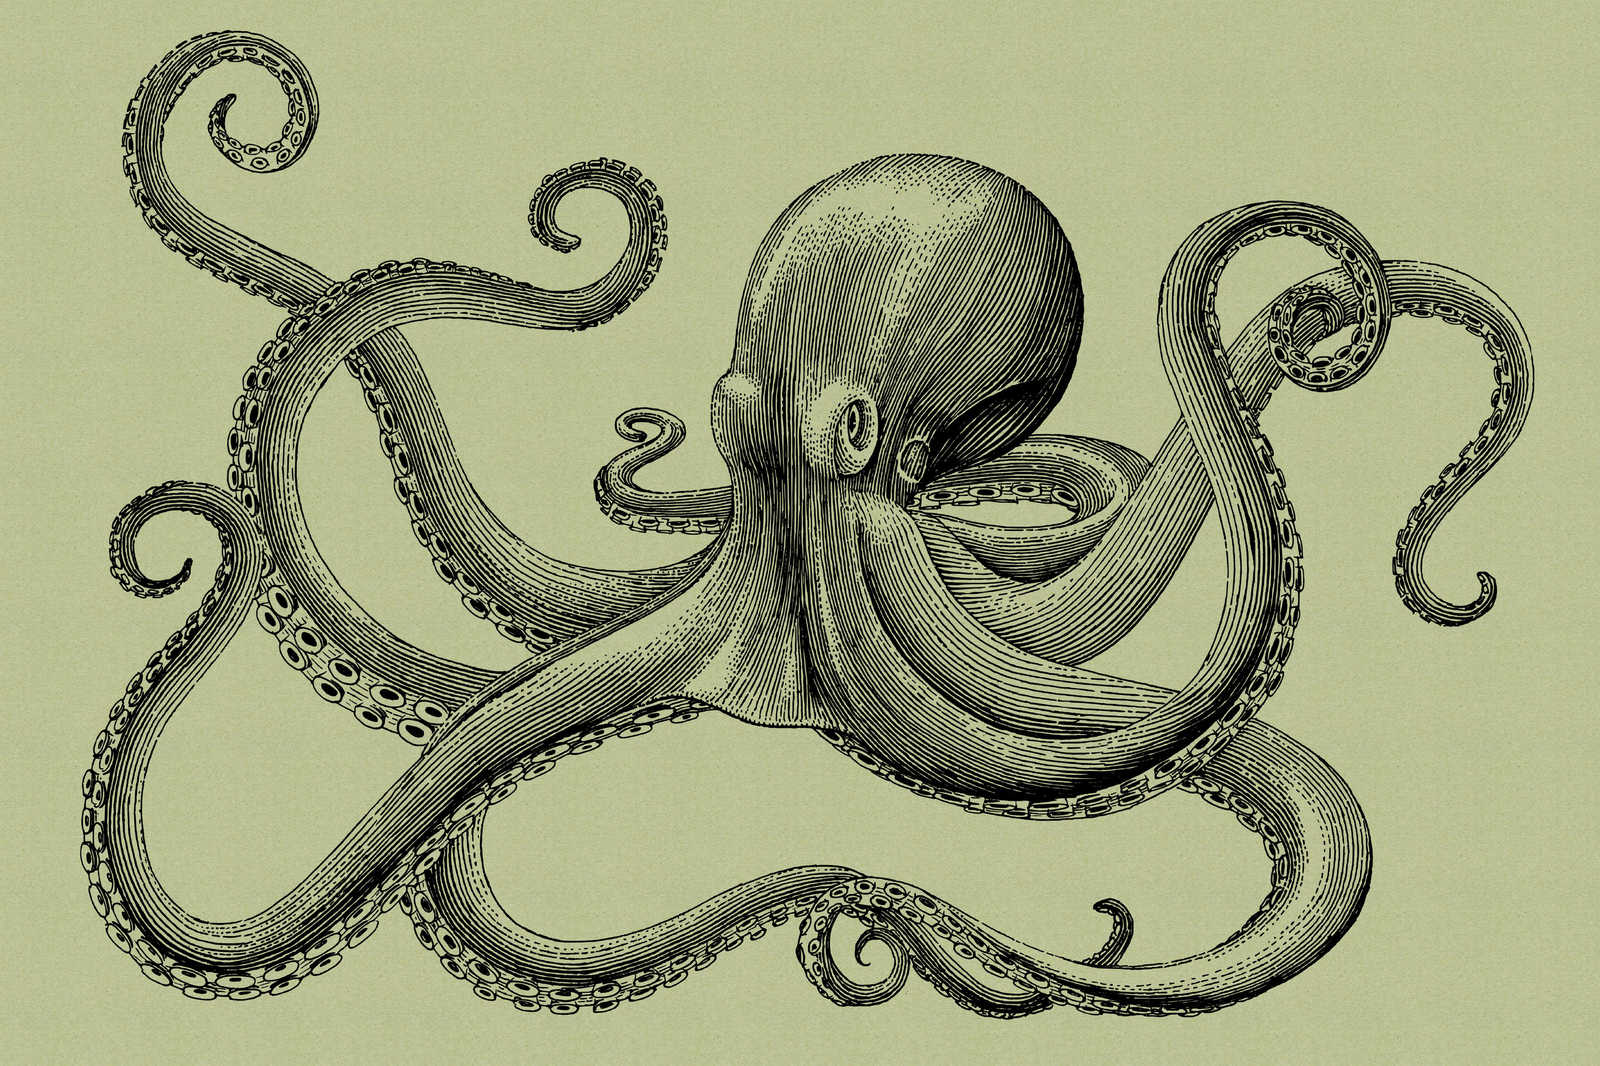             Jules 3 - Quadro su tela Octopus in stile schizzo e look vintage - Natura qualita consistenza in cartone - 0,90 m x 0,60 m
        